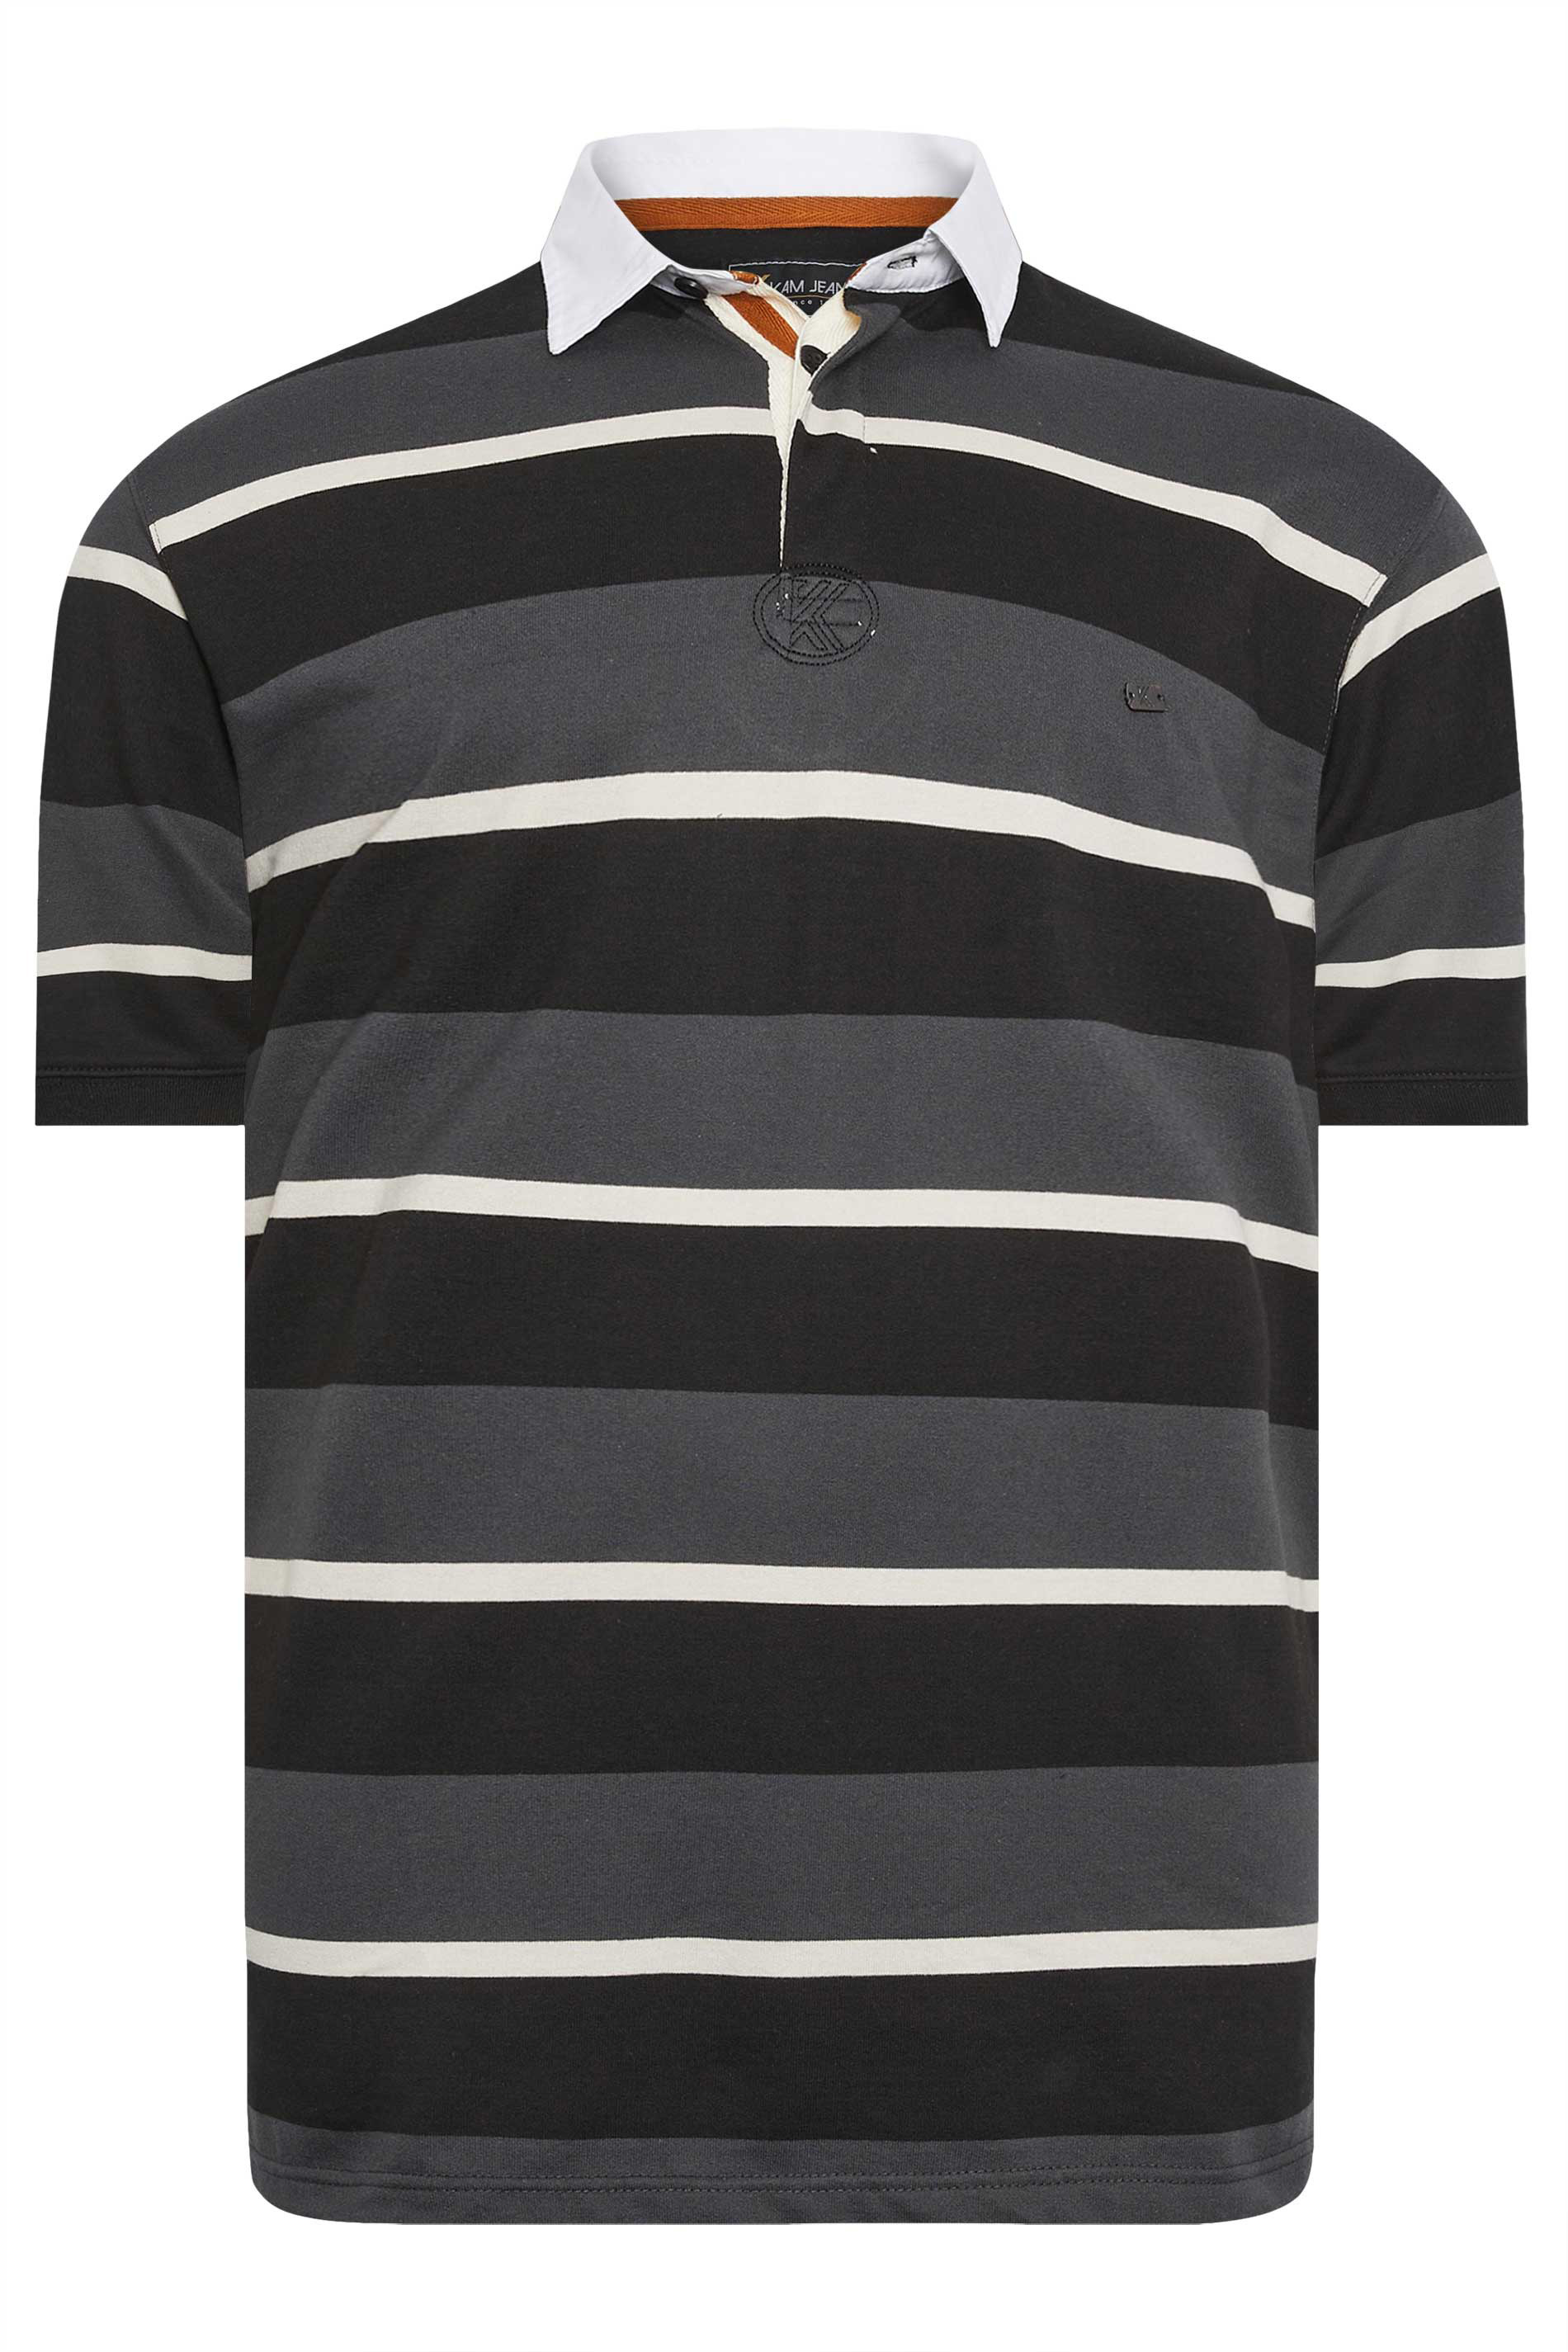 KAM Big & Tall Charcoal Grey Striped Rugby Polo Shirt | BadRhino 3